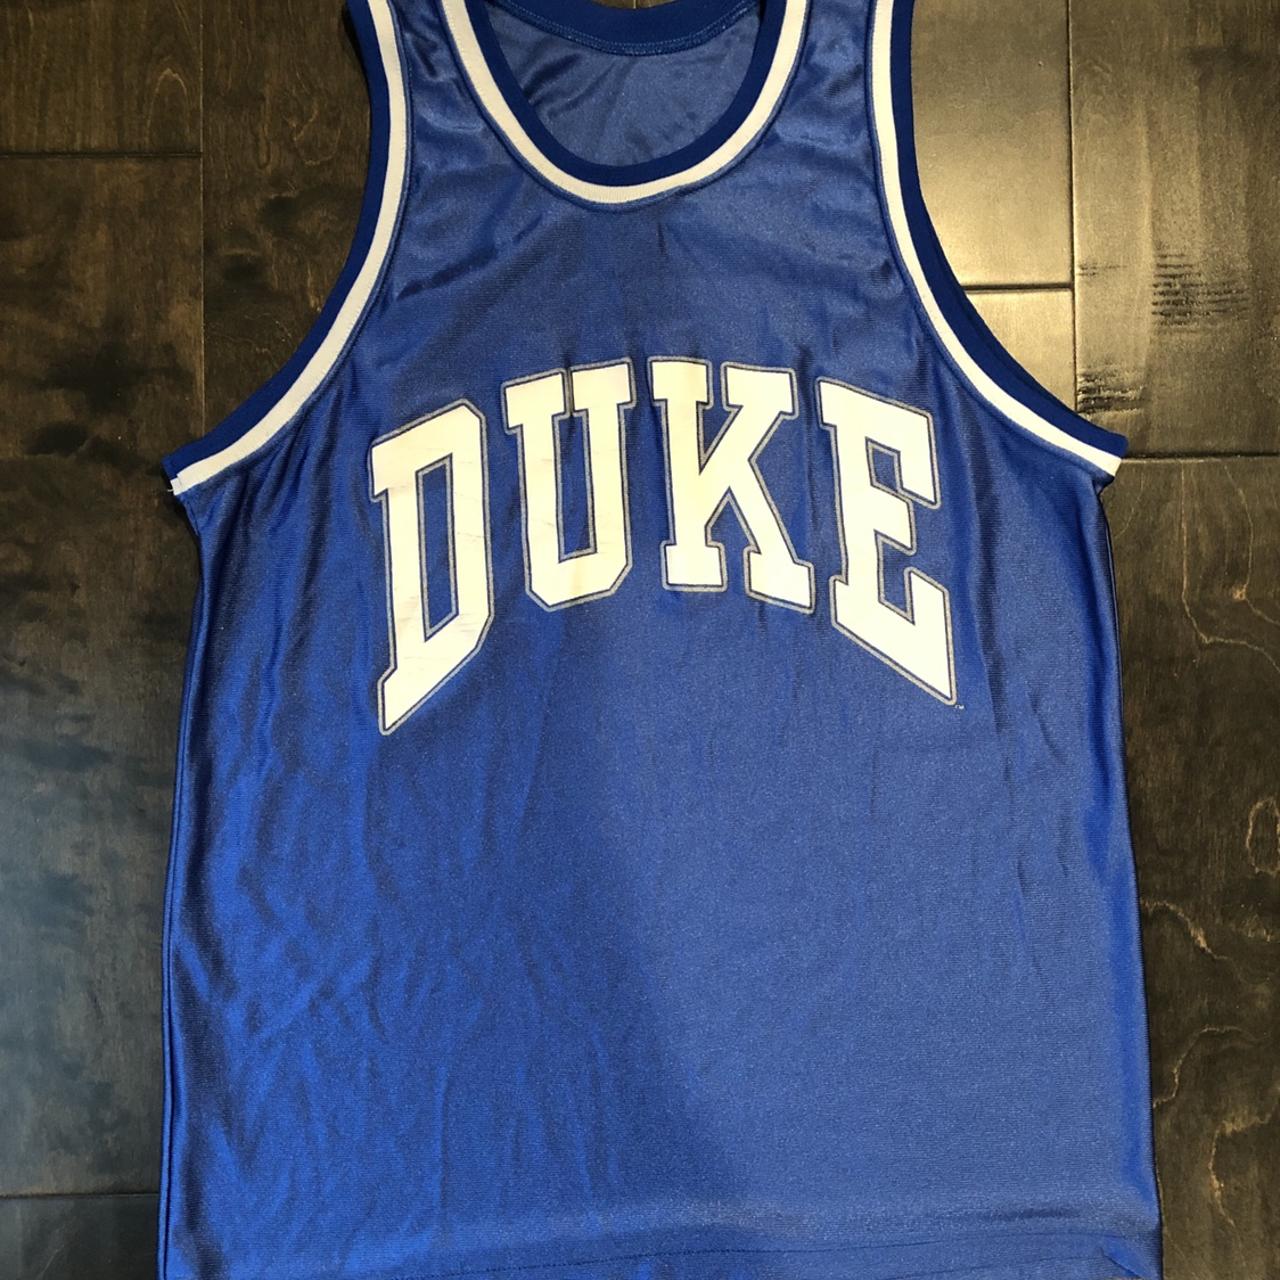 Duke Blue Devils blank basketball jersey. No tag but - Depop